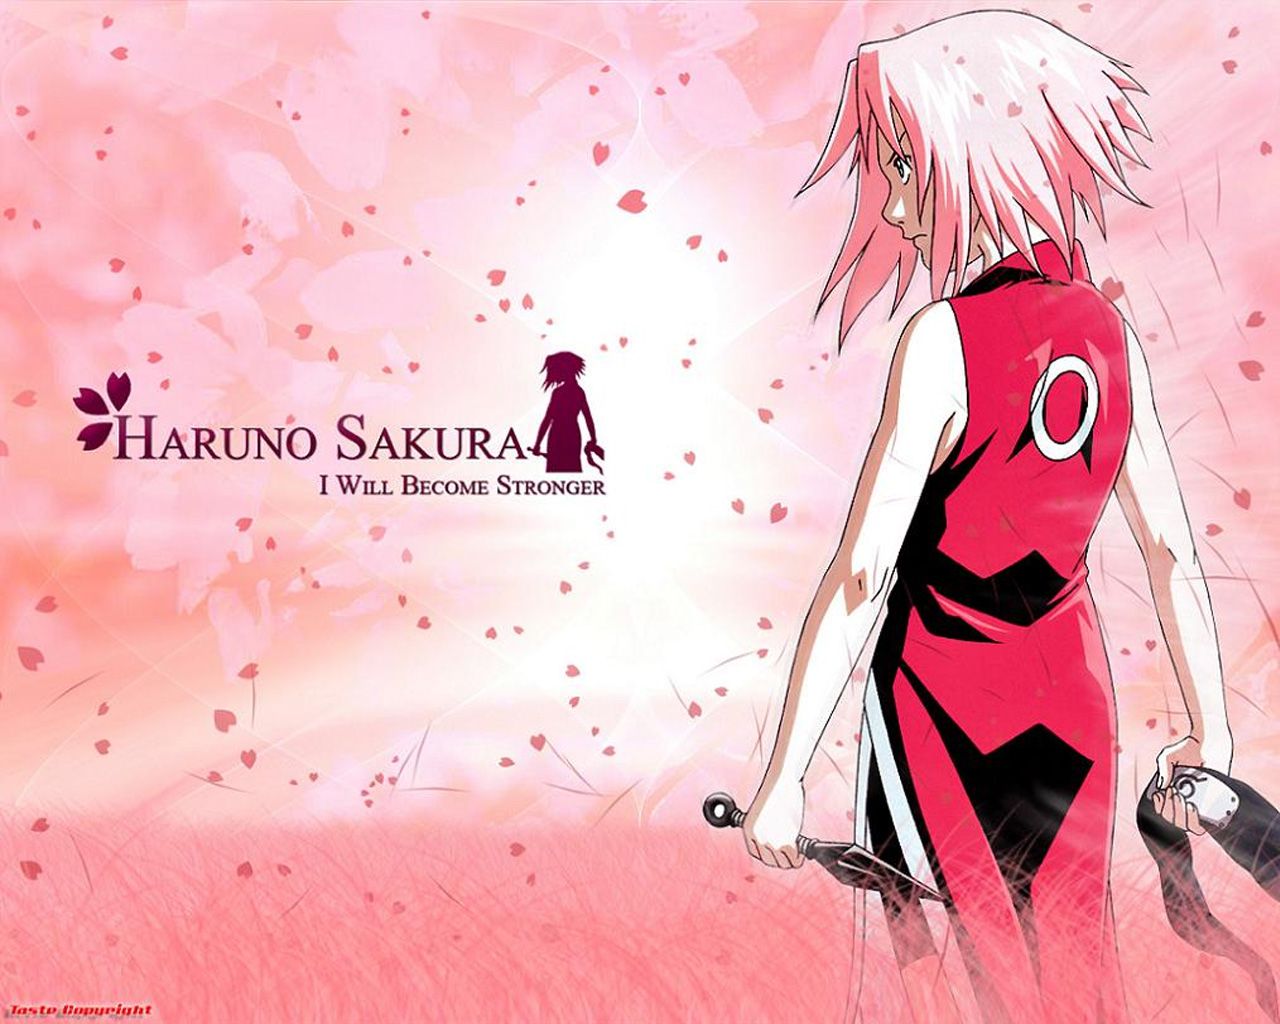 Sakura Haruno Background. Sakura Wallpaper, Naruto Sakura Wallpaper and Sakura Sasuke Wallpaper